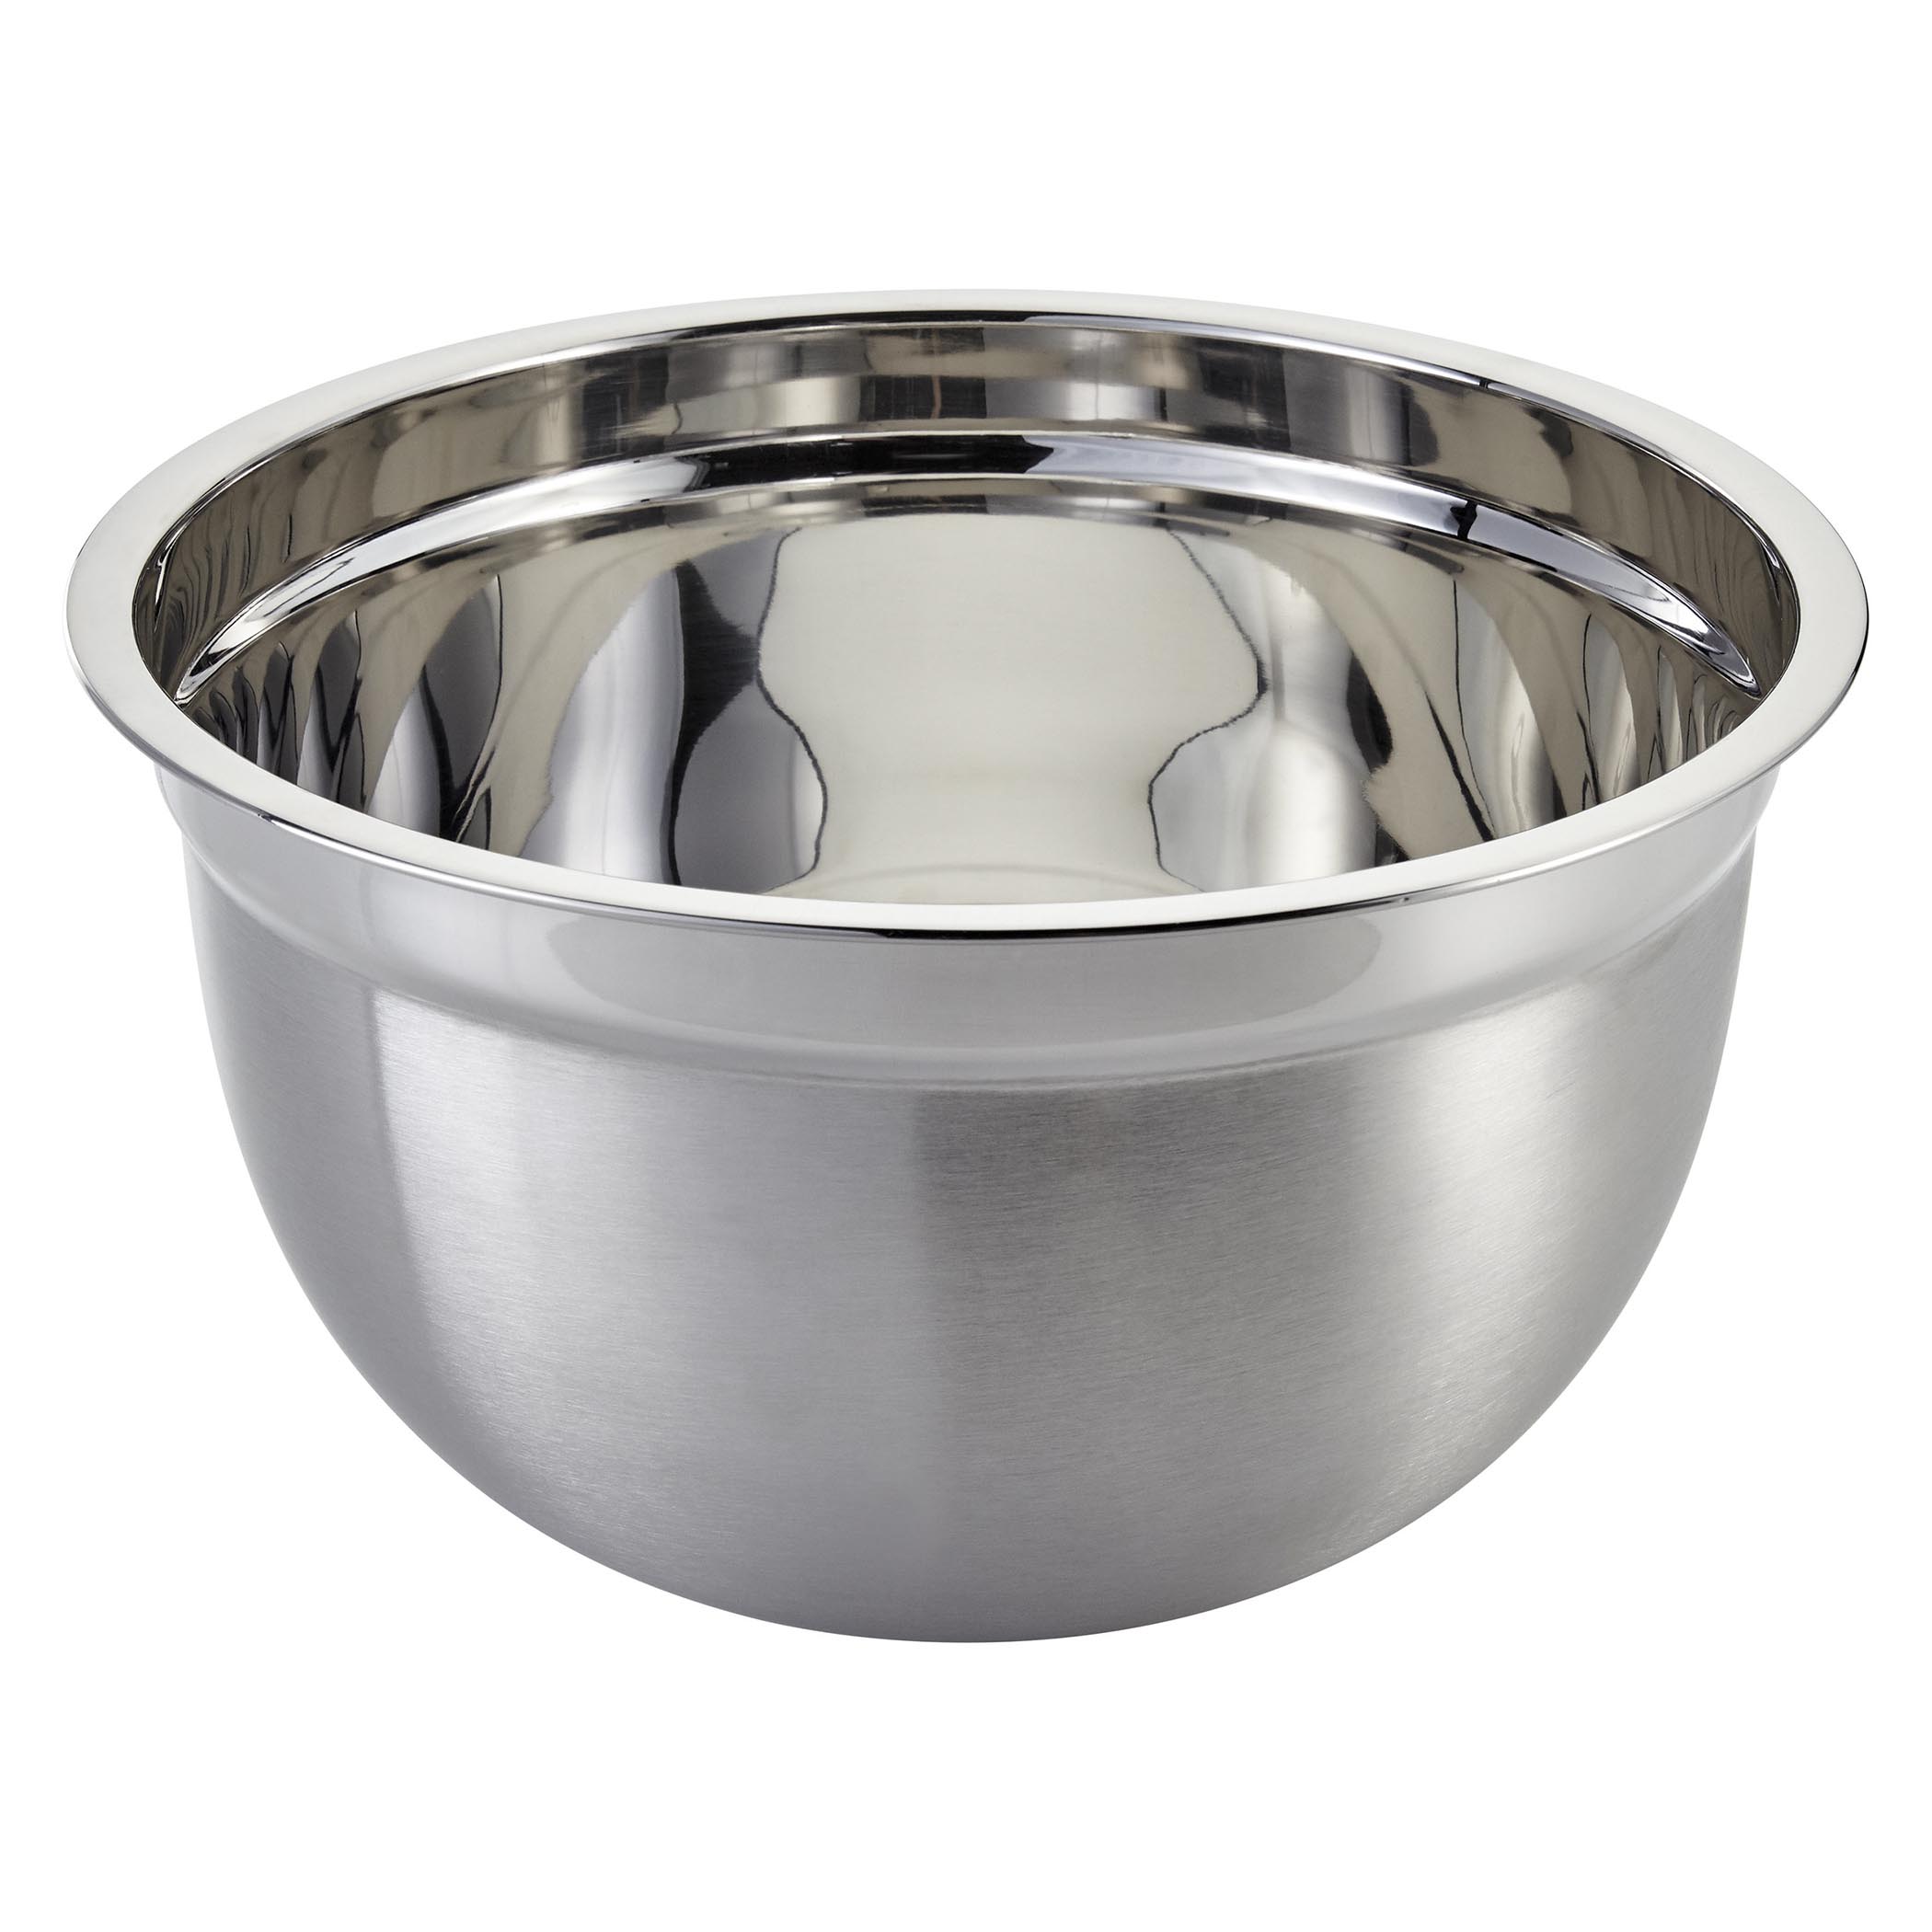 melamine vs stainless steel mixing bowls